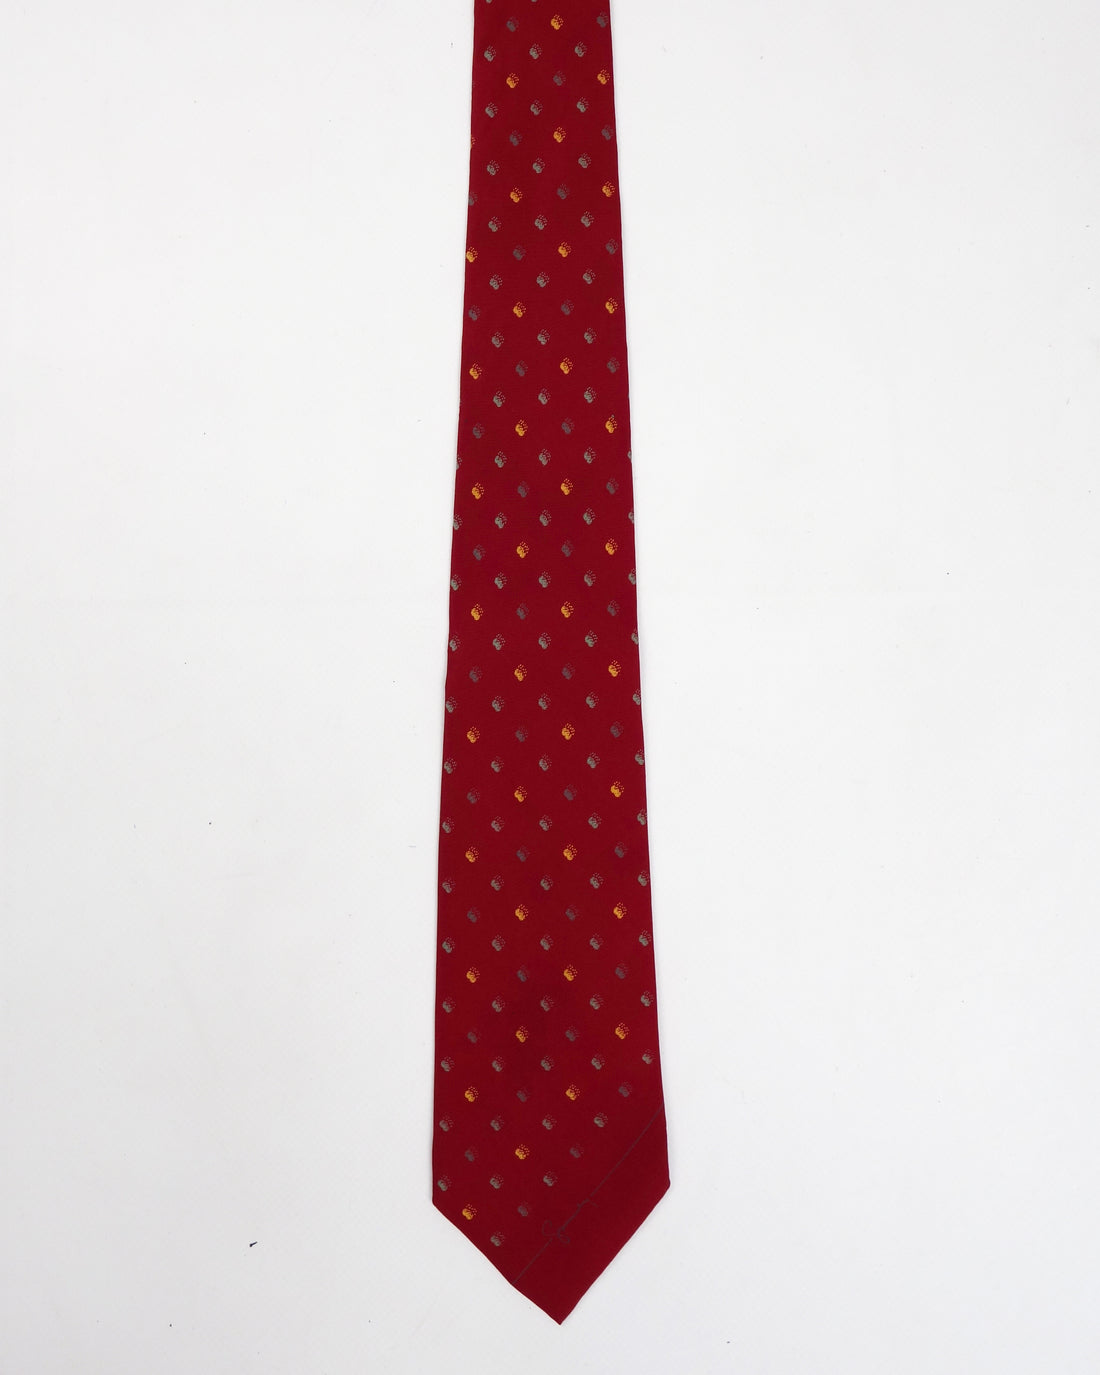 Givenchy Gentleman Dots Pattern Silk Tie 1990's